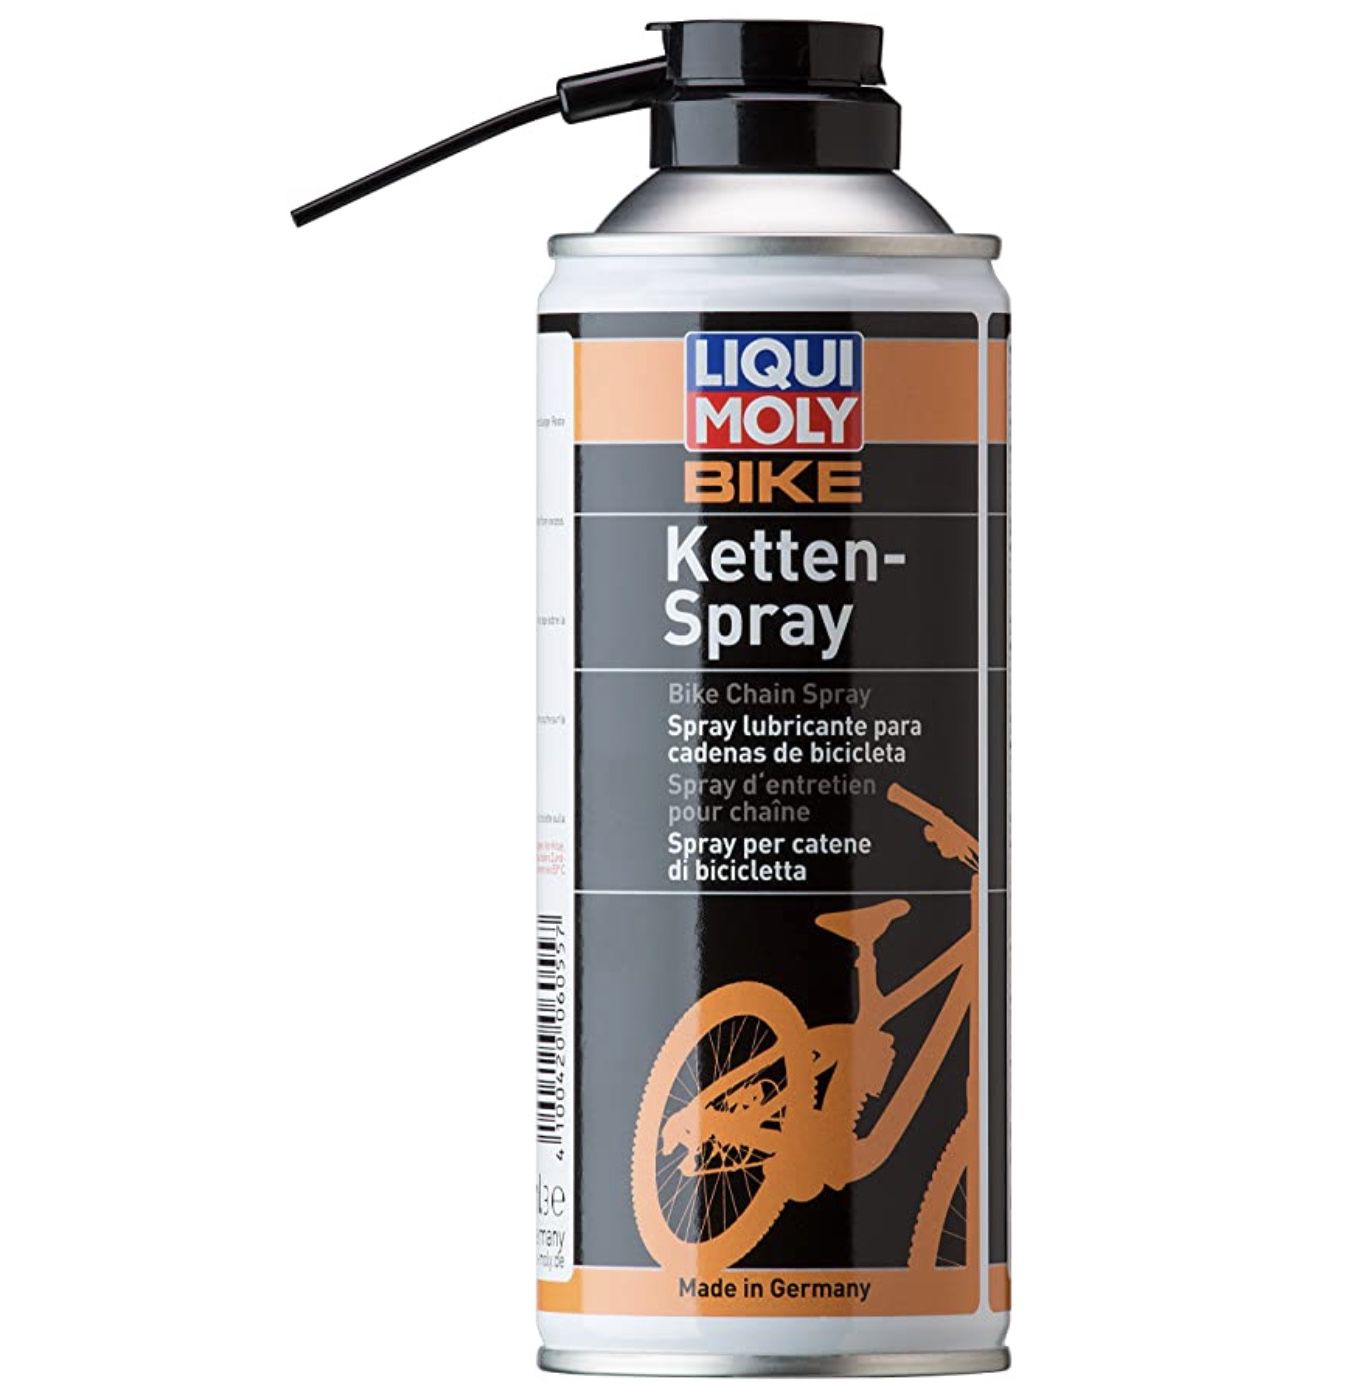 LIQUI MOLY Bike Kettenspray 400 ml für 6,59€ (statt 11€) &#8211; Prime